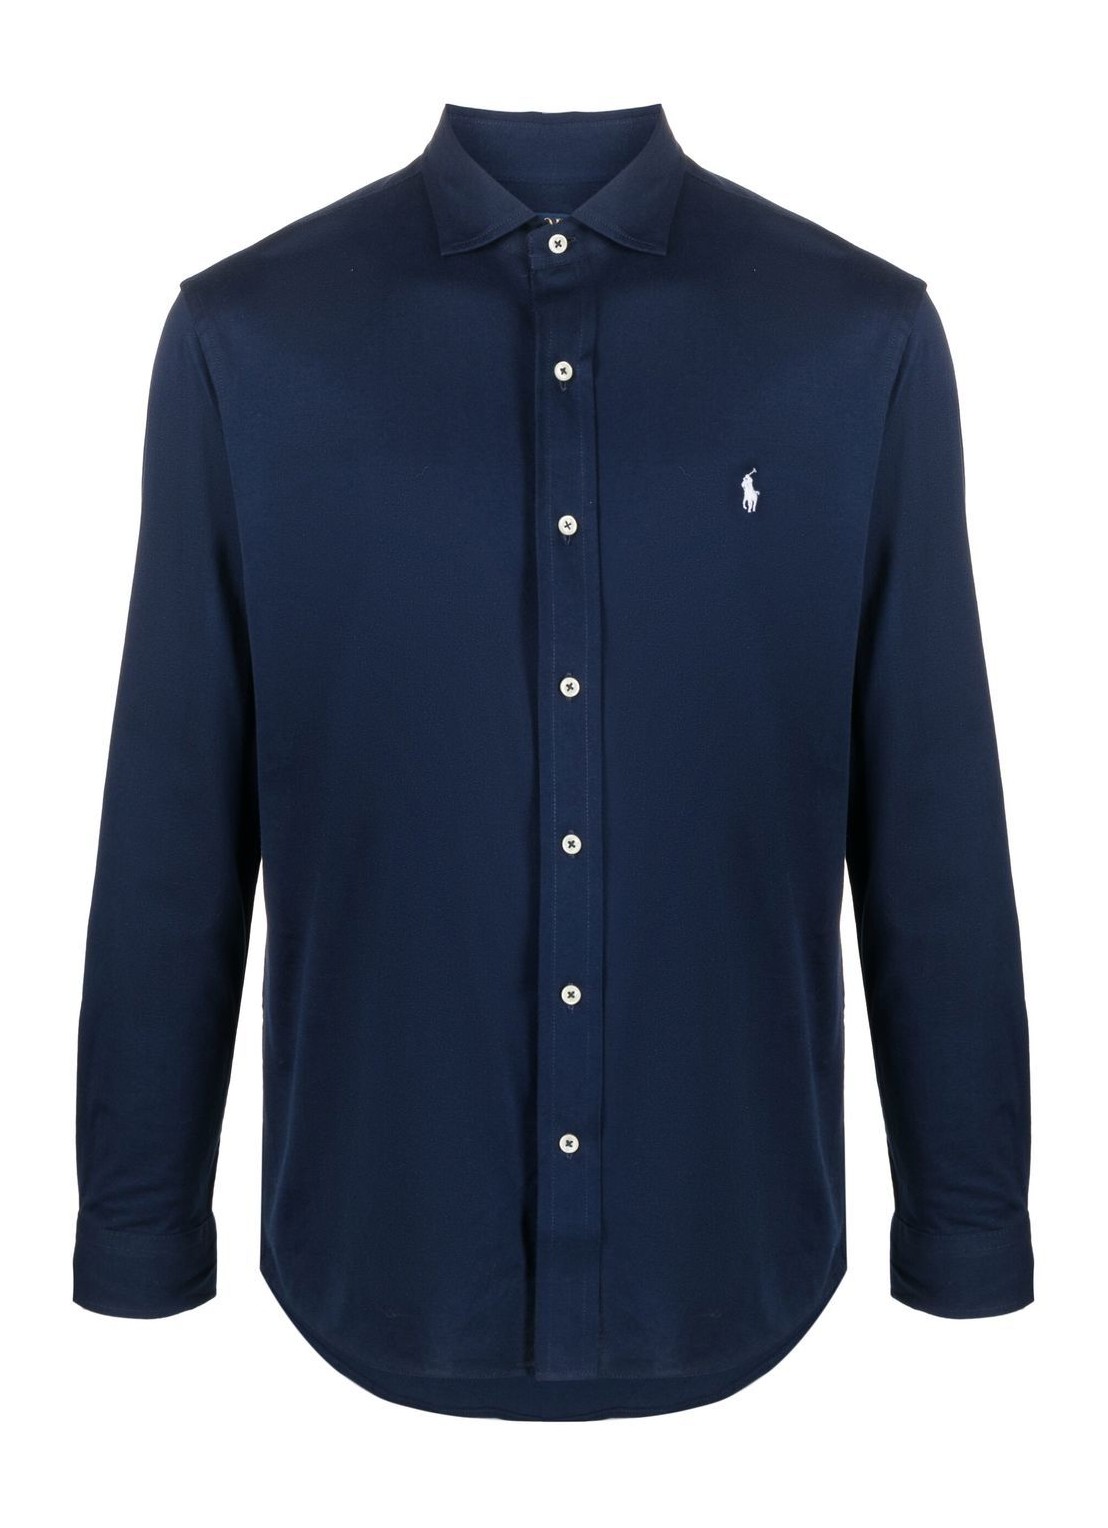 Camiseria polo ralph lauren shirt man lsfbestatem1-long sleeve-sport shirt 710899386003 cruise navy 